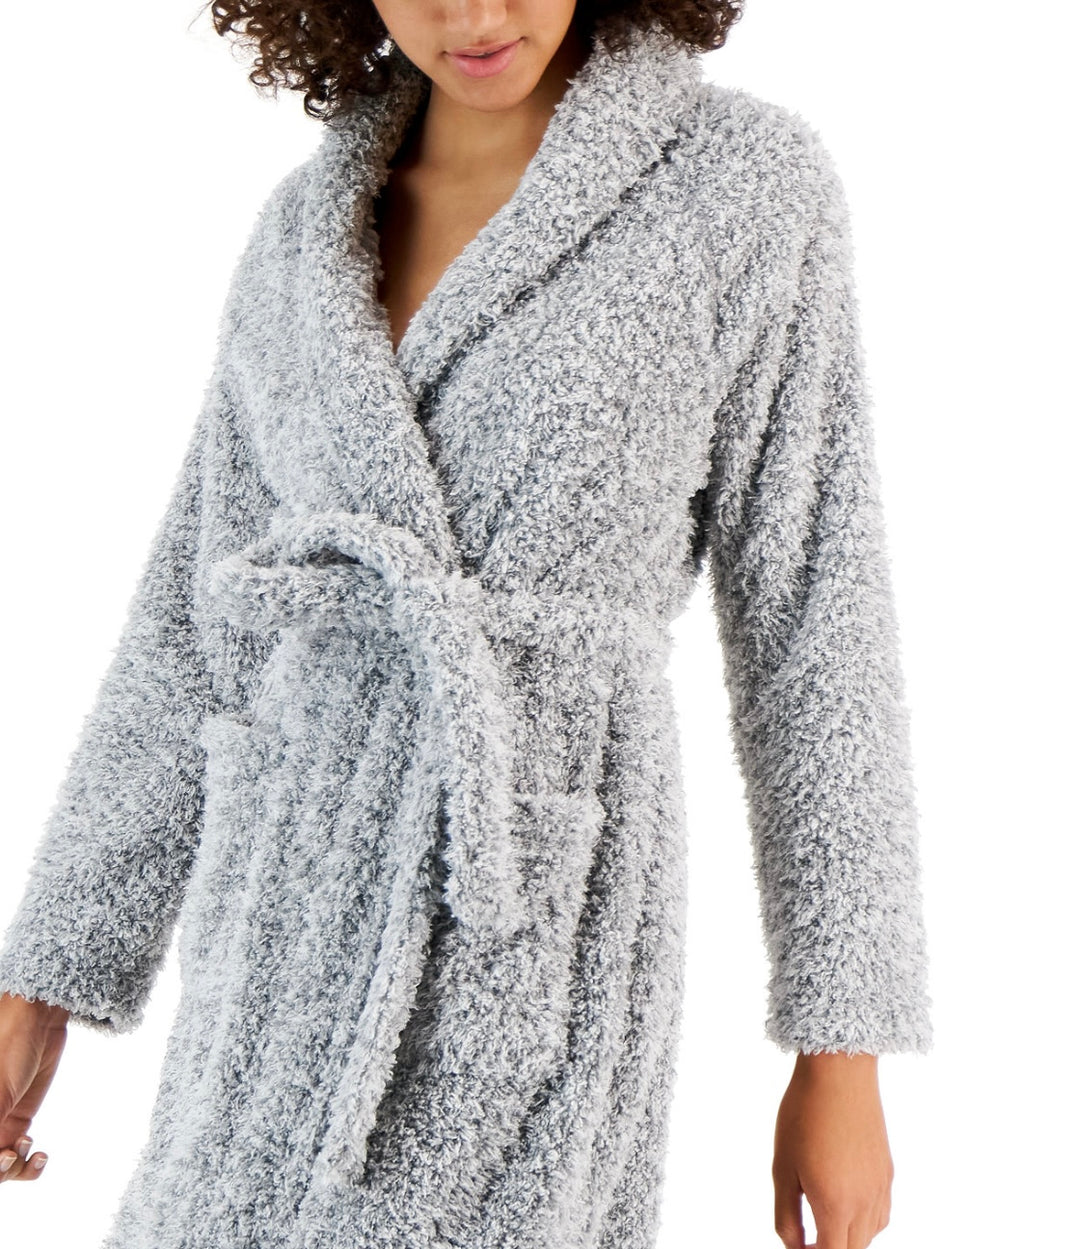 Charter Club Women's Short Shaggy Fleece Robe Greystone Size XS/S